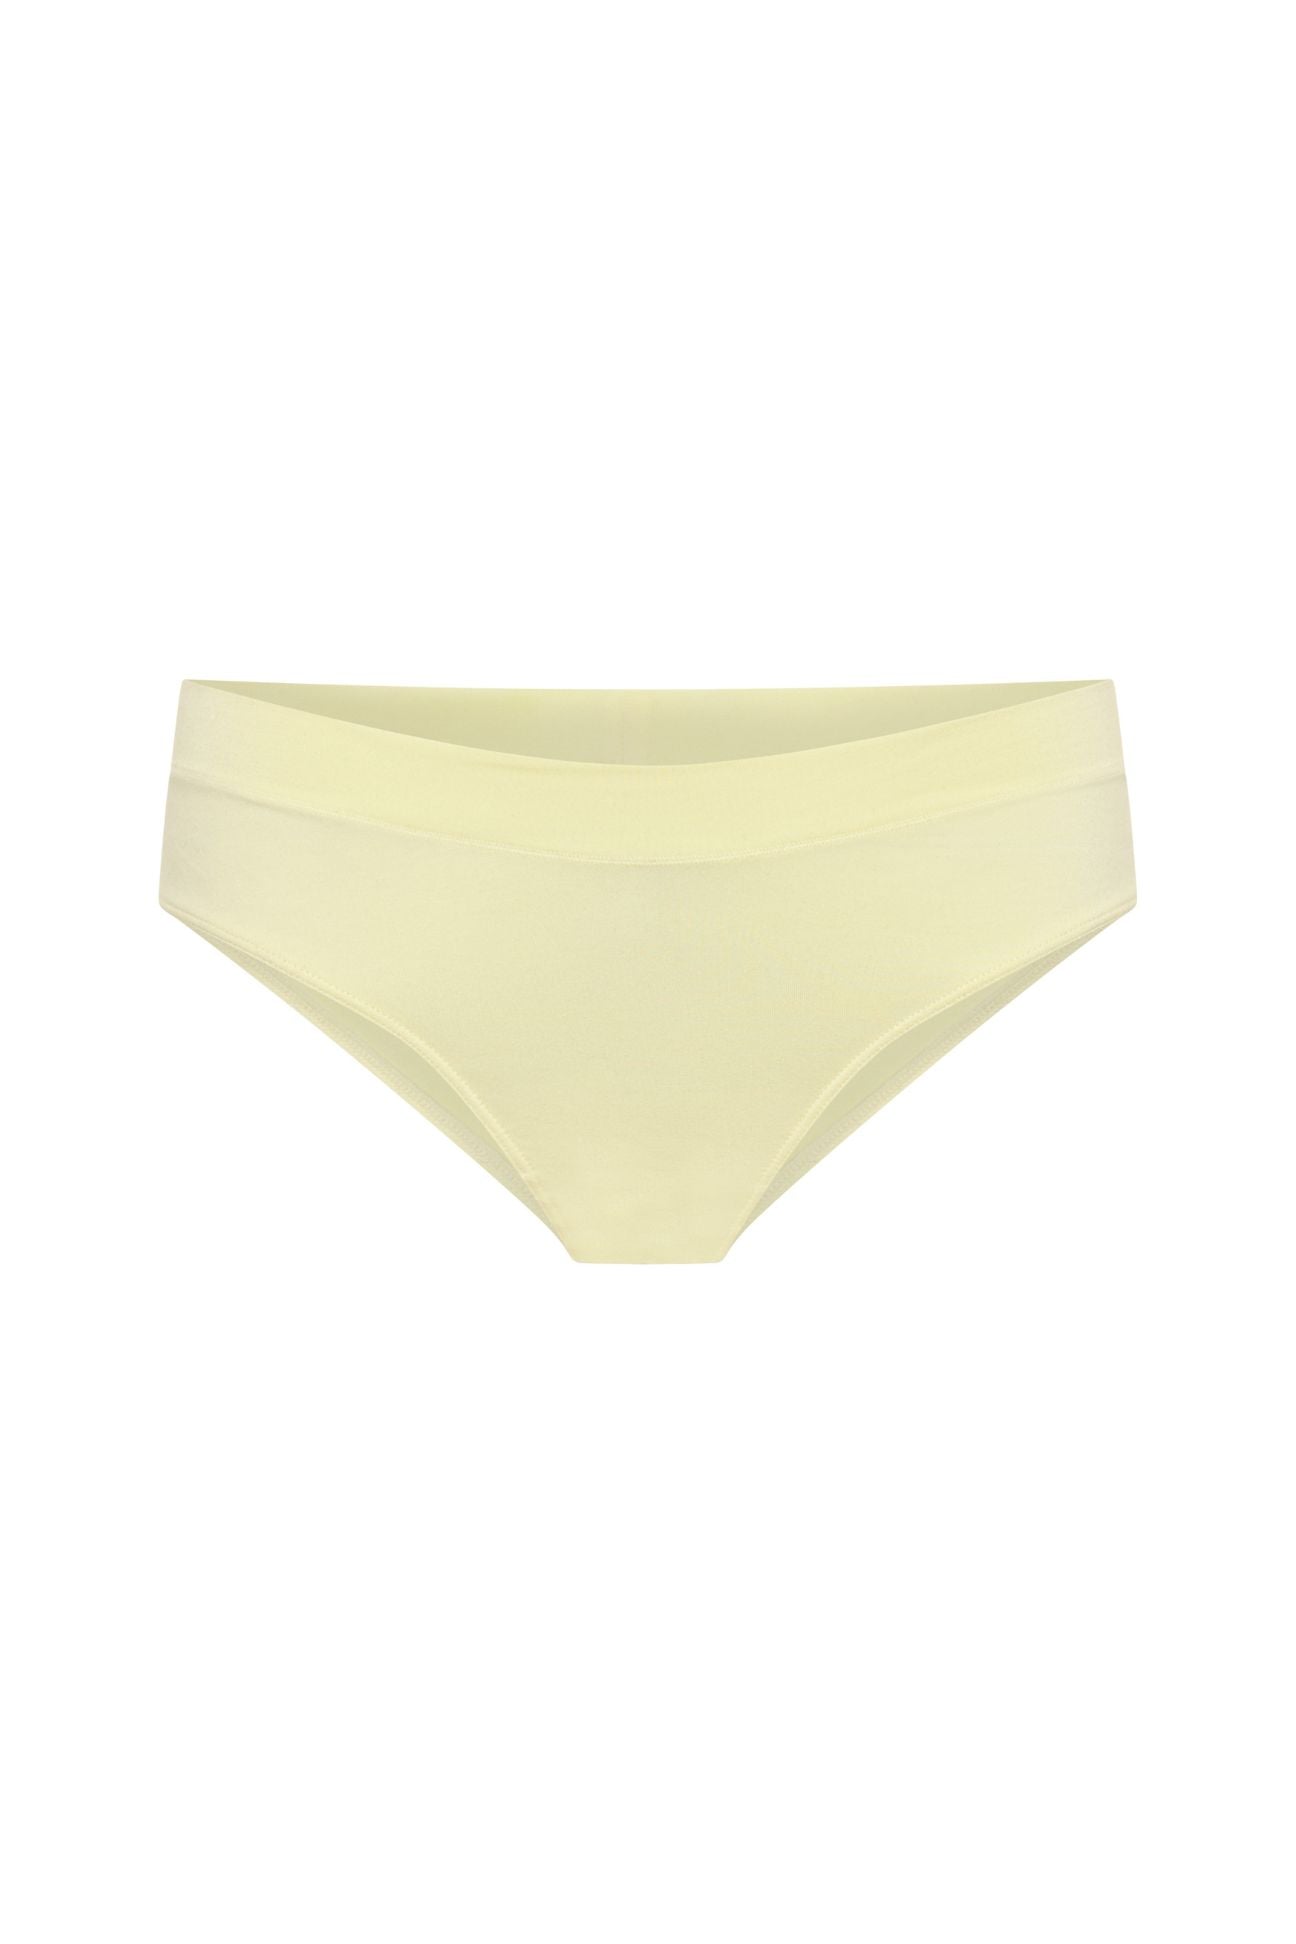 The Bikini - Lemon Limited Edition, Undies - First Thing Underwear